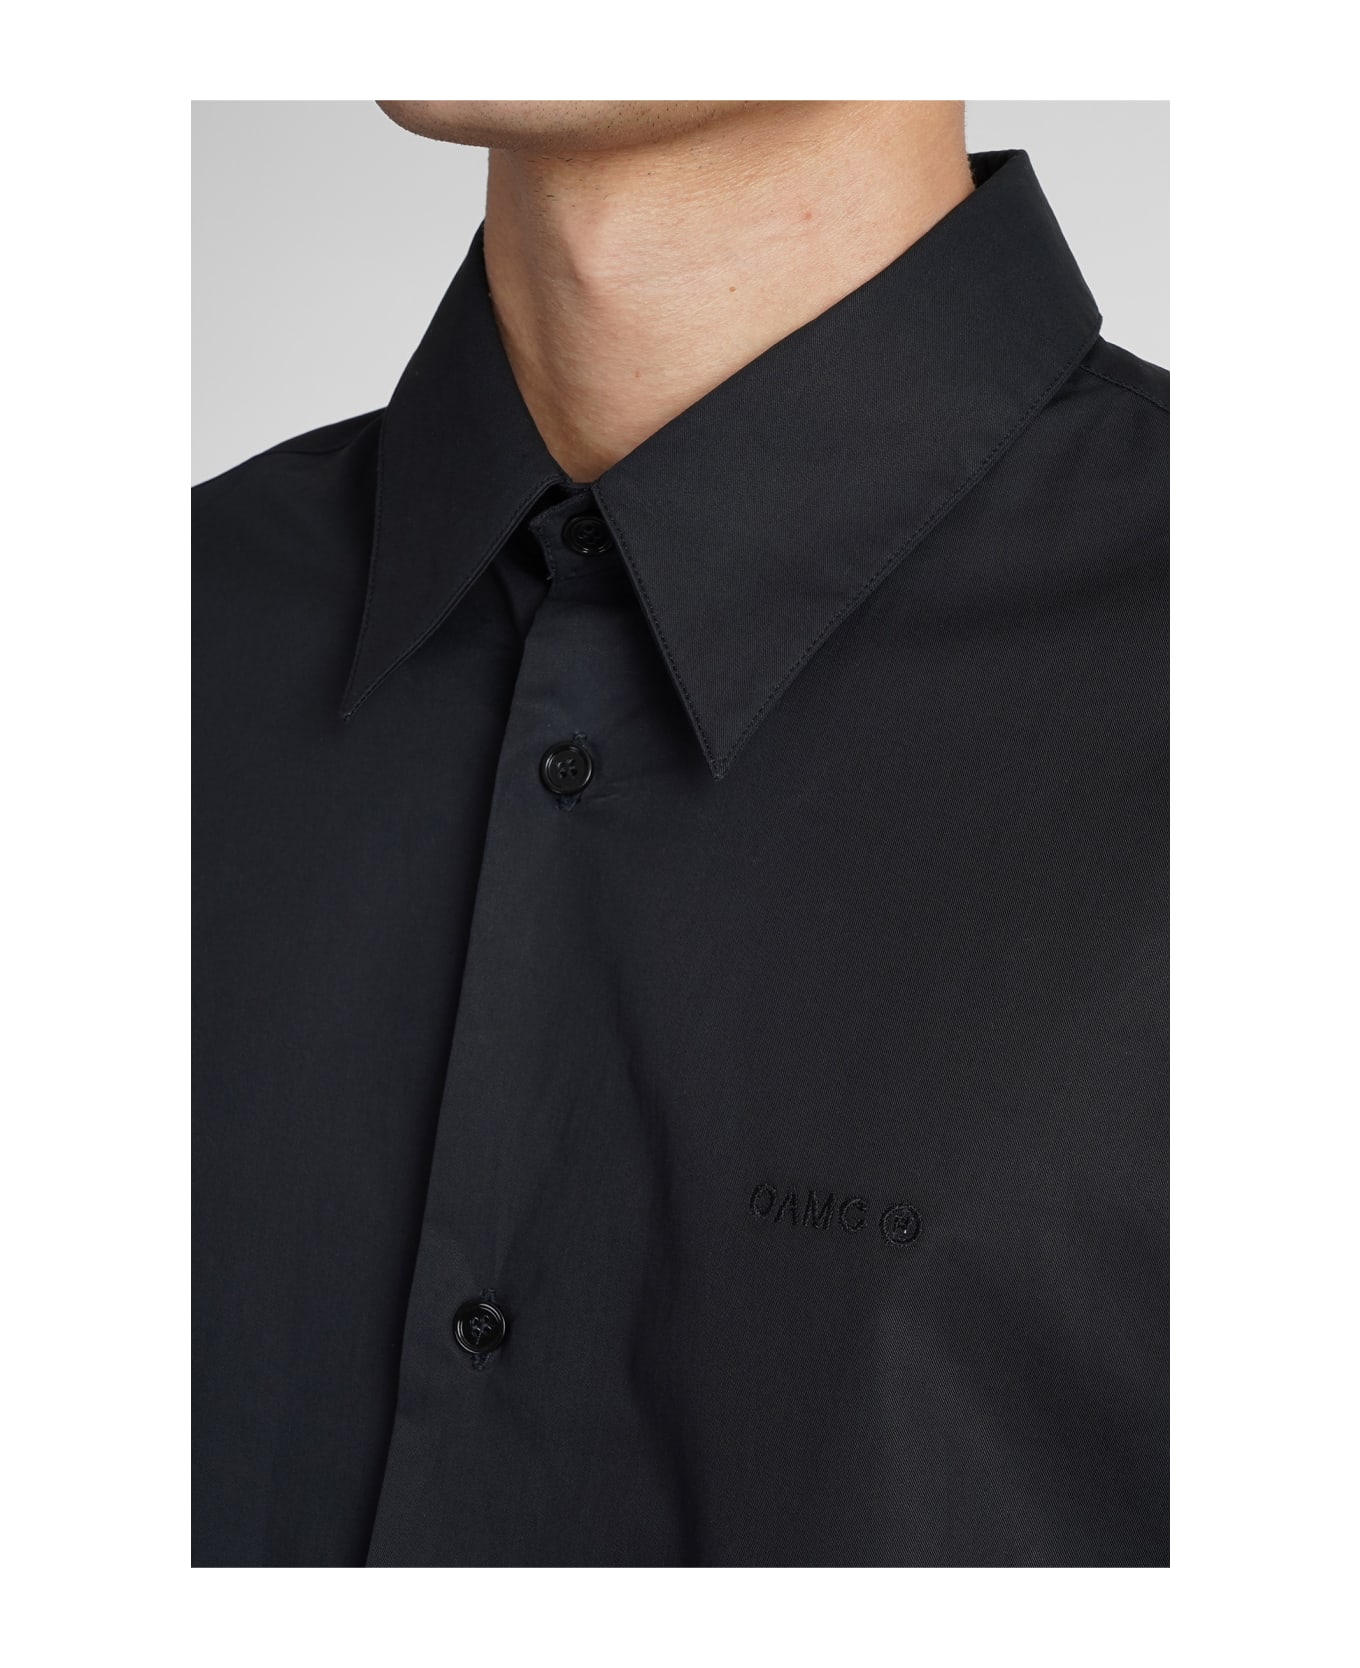 OAMC Mark Shirt Woven Shirt In Black Cotton - black